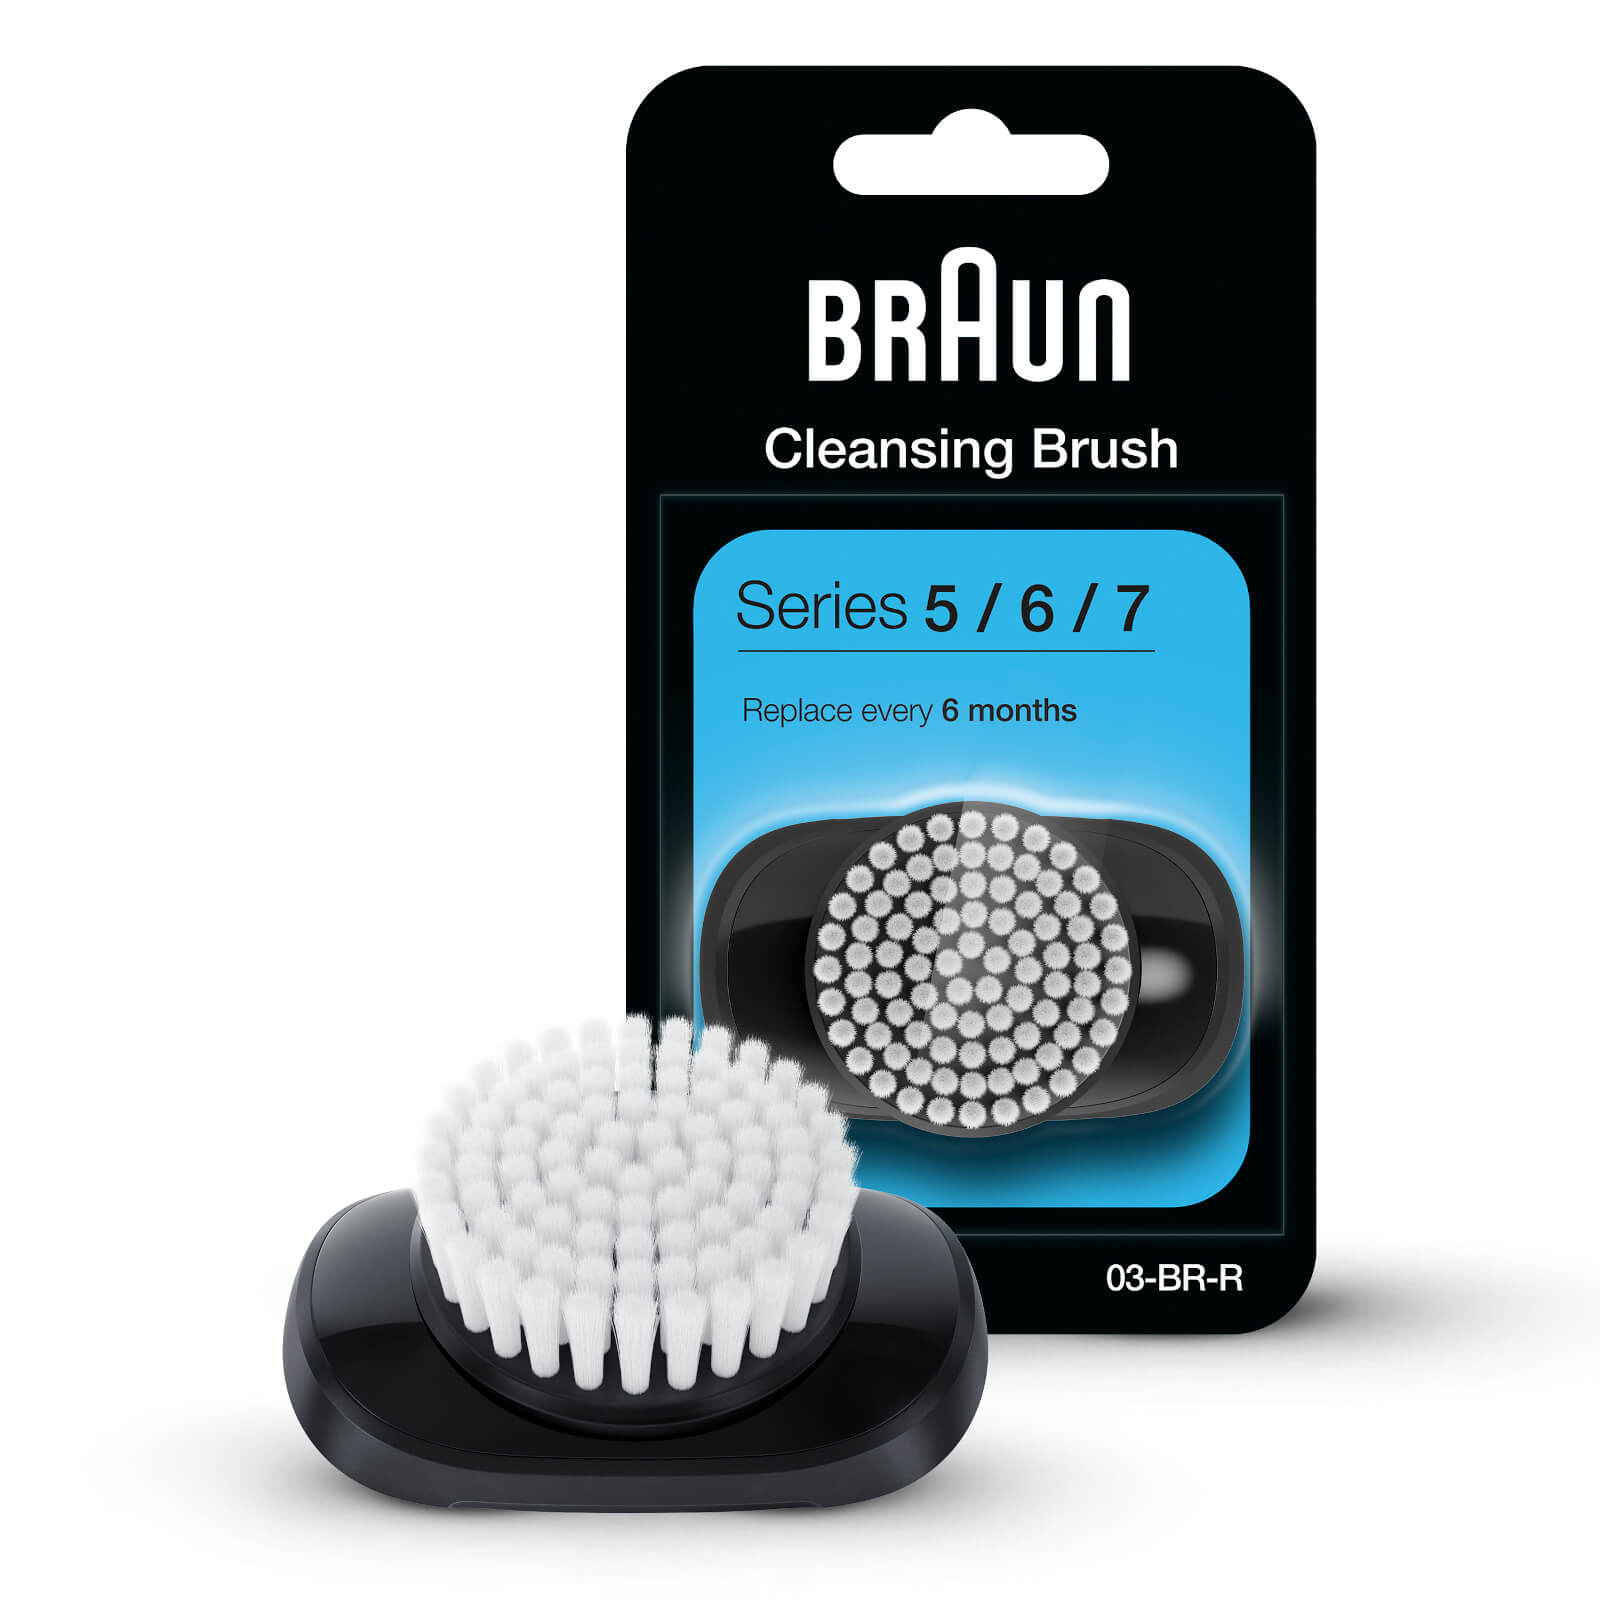 Braun EasyClick Cleansing Brush Refill